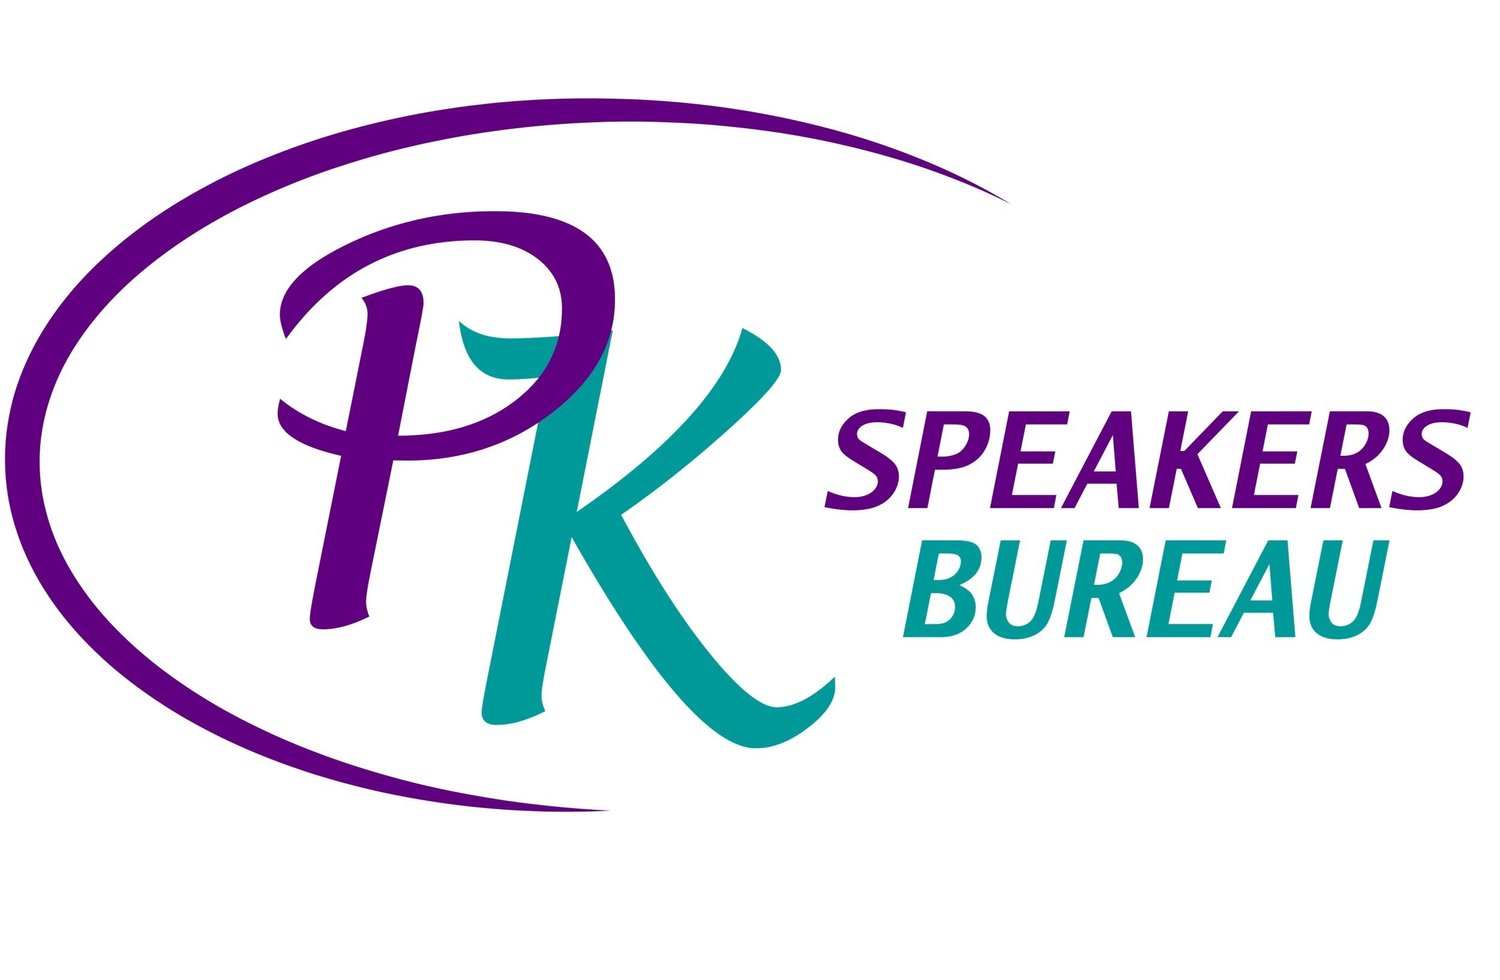 PK Speakers Bureau